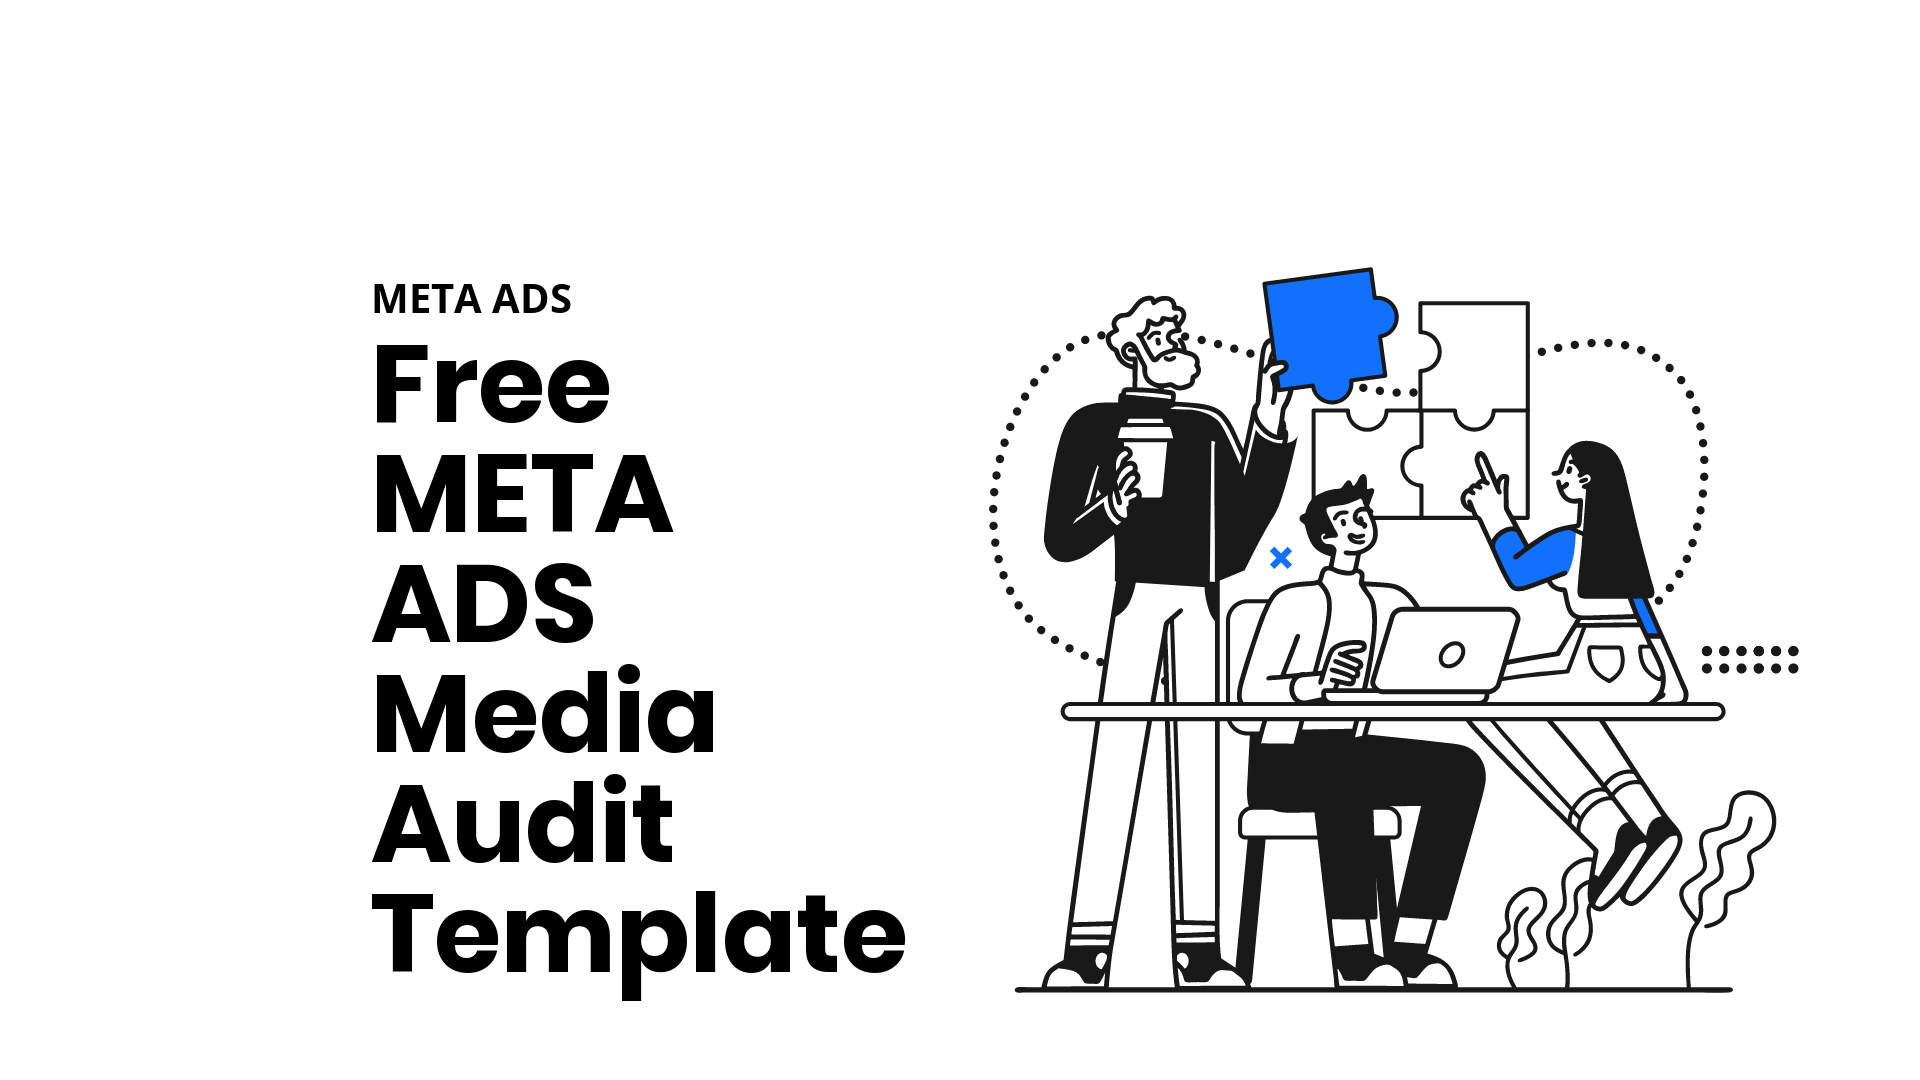 Free META ADS media audit template (Notion)